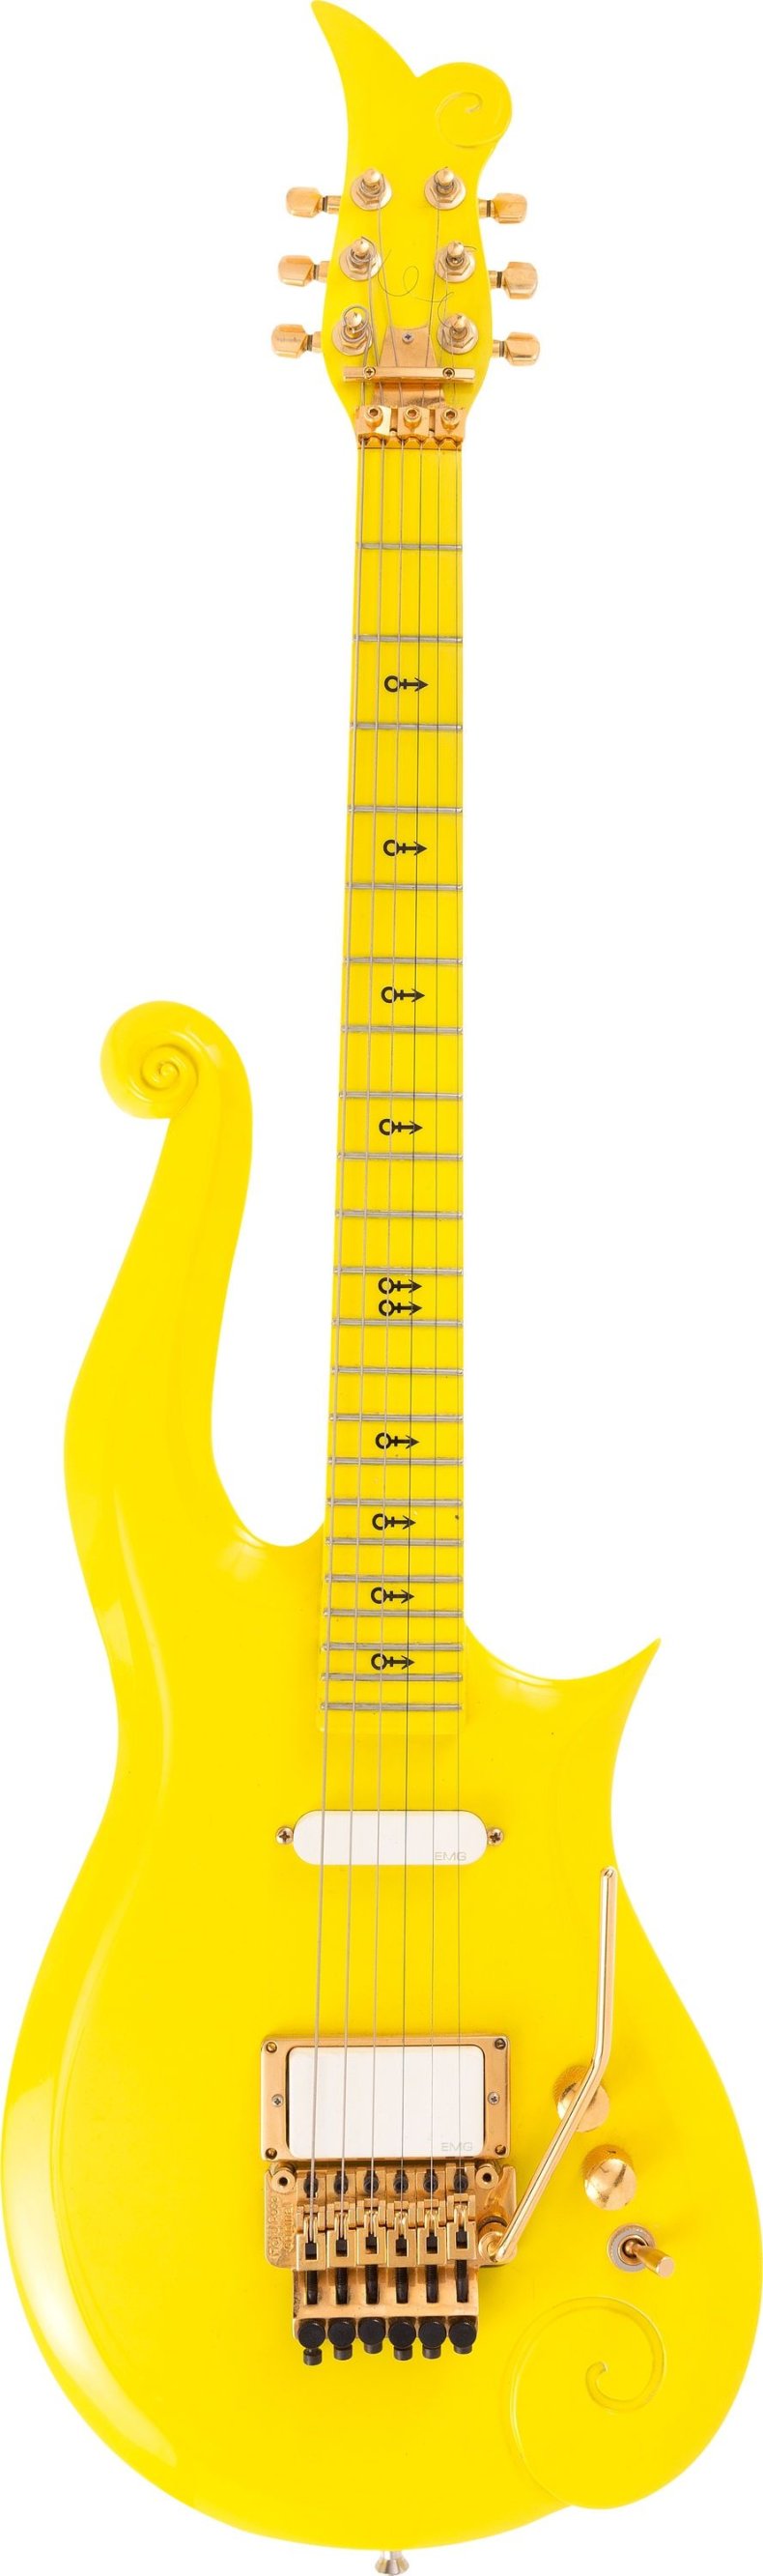 Prince's guitar